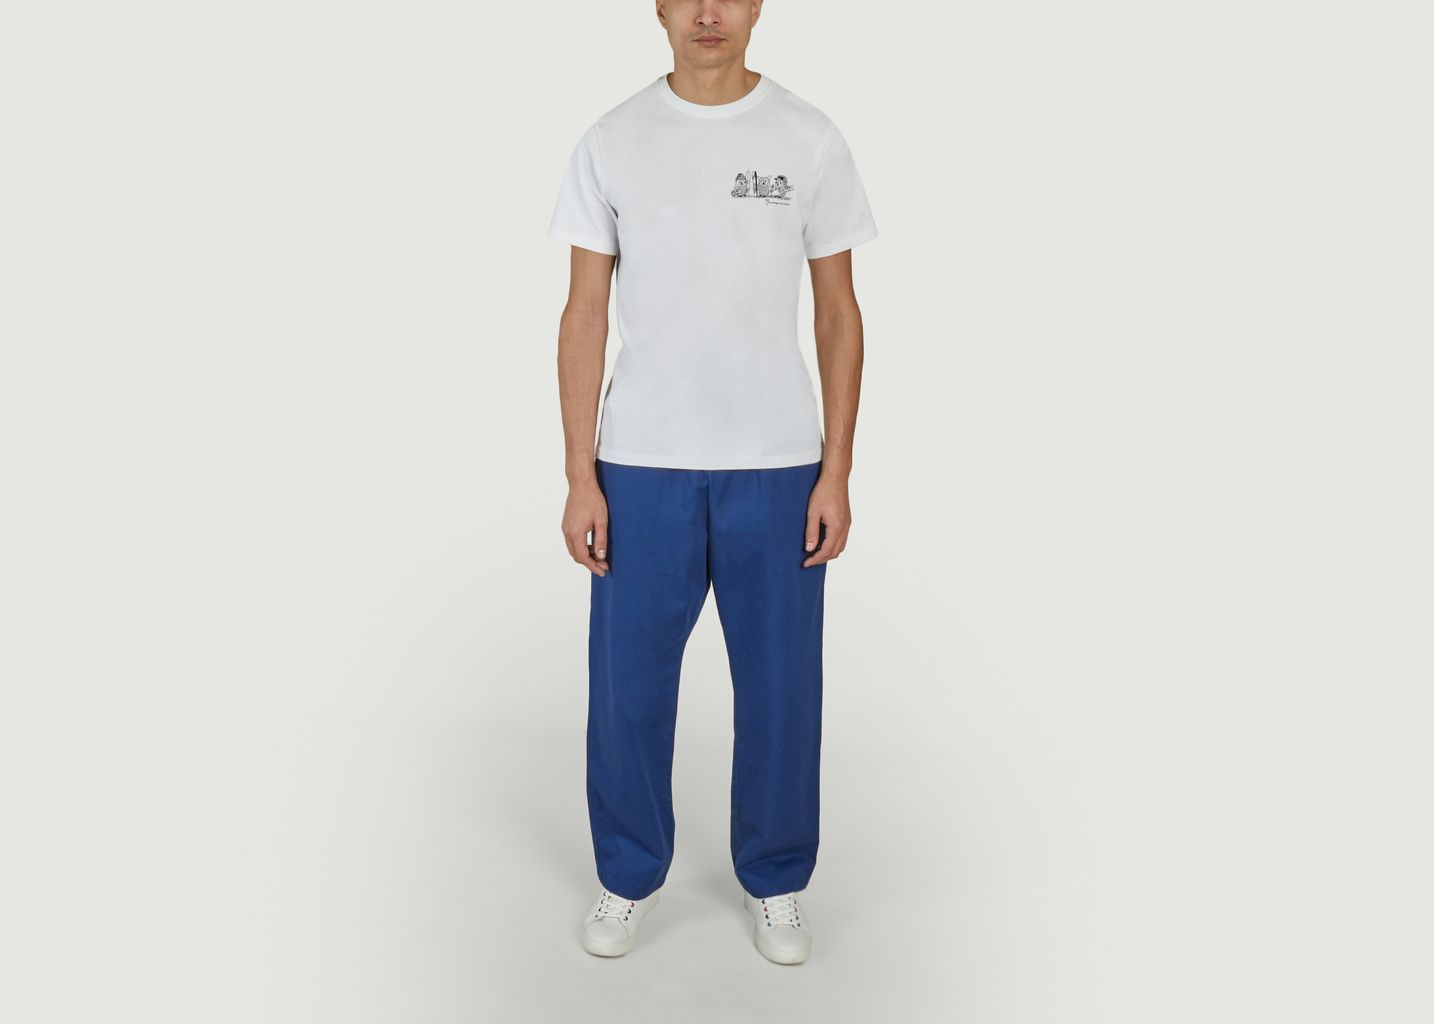 Chino pants - Japan Blue Jeans